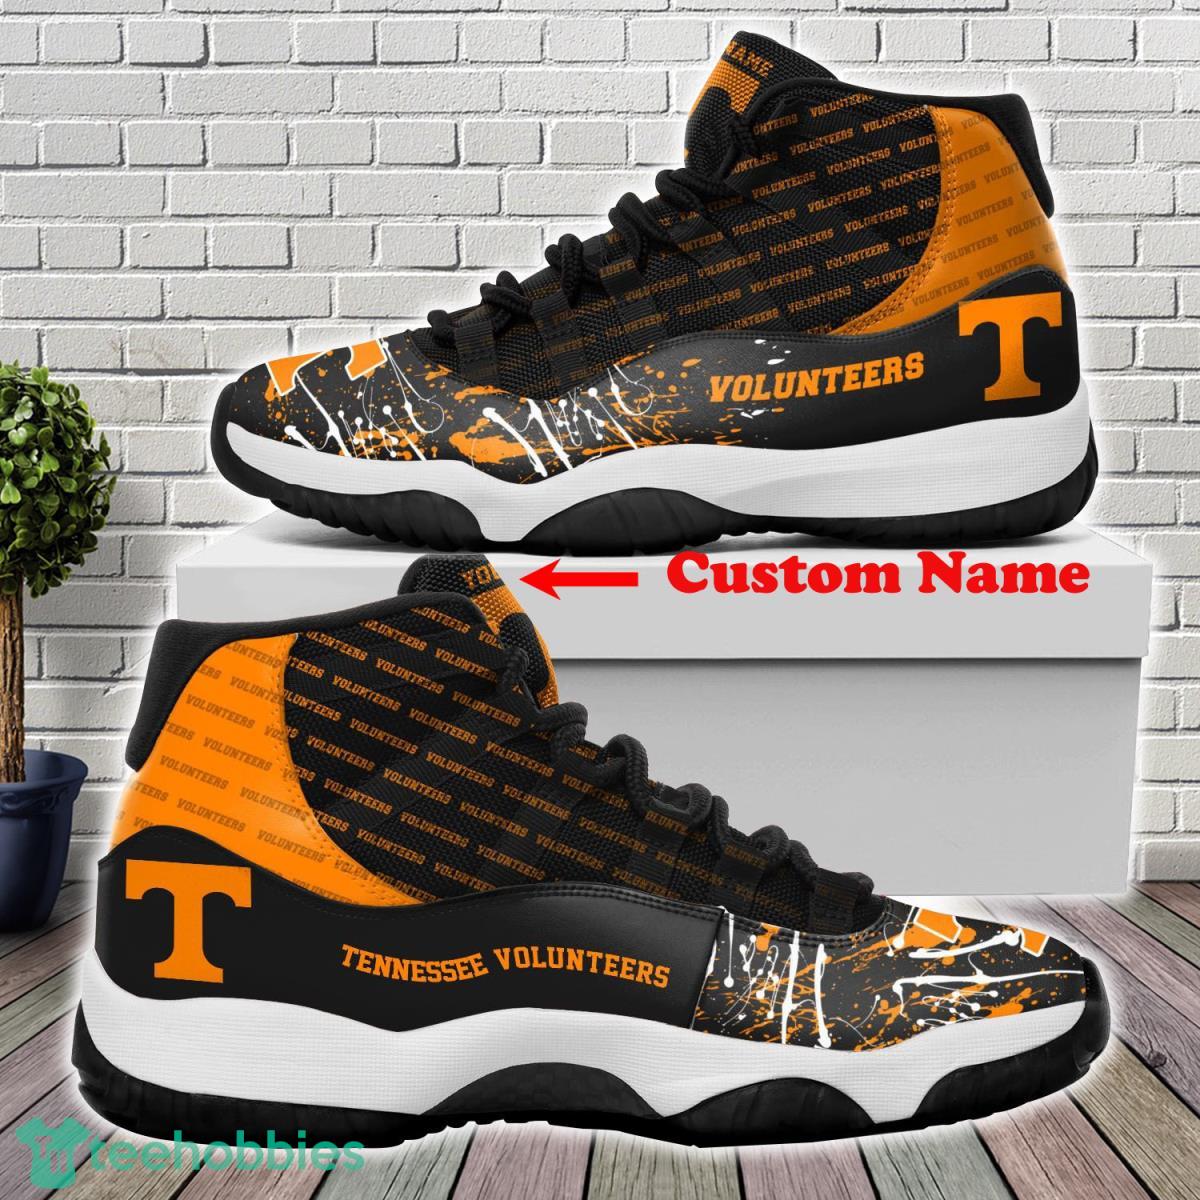 Tennessee Volunteers Custom Name Air Jordan 11 Sneakers For Fans Product Photo 1